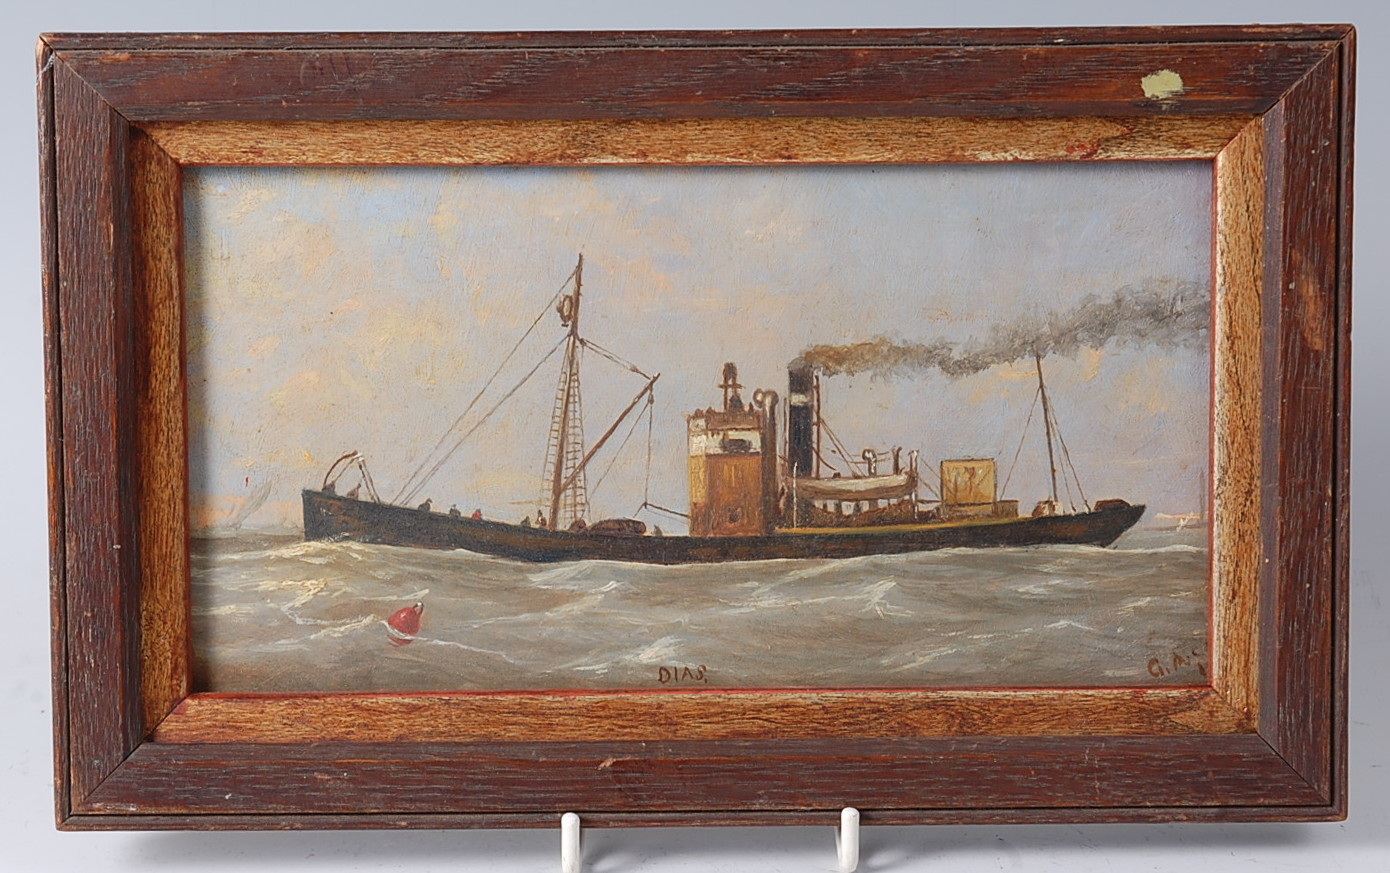 Early 20th century English school - Study of the Hull fishing trawler Dias, oil on board,